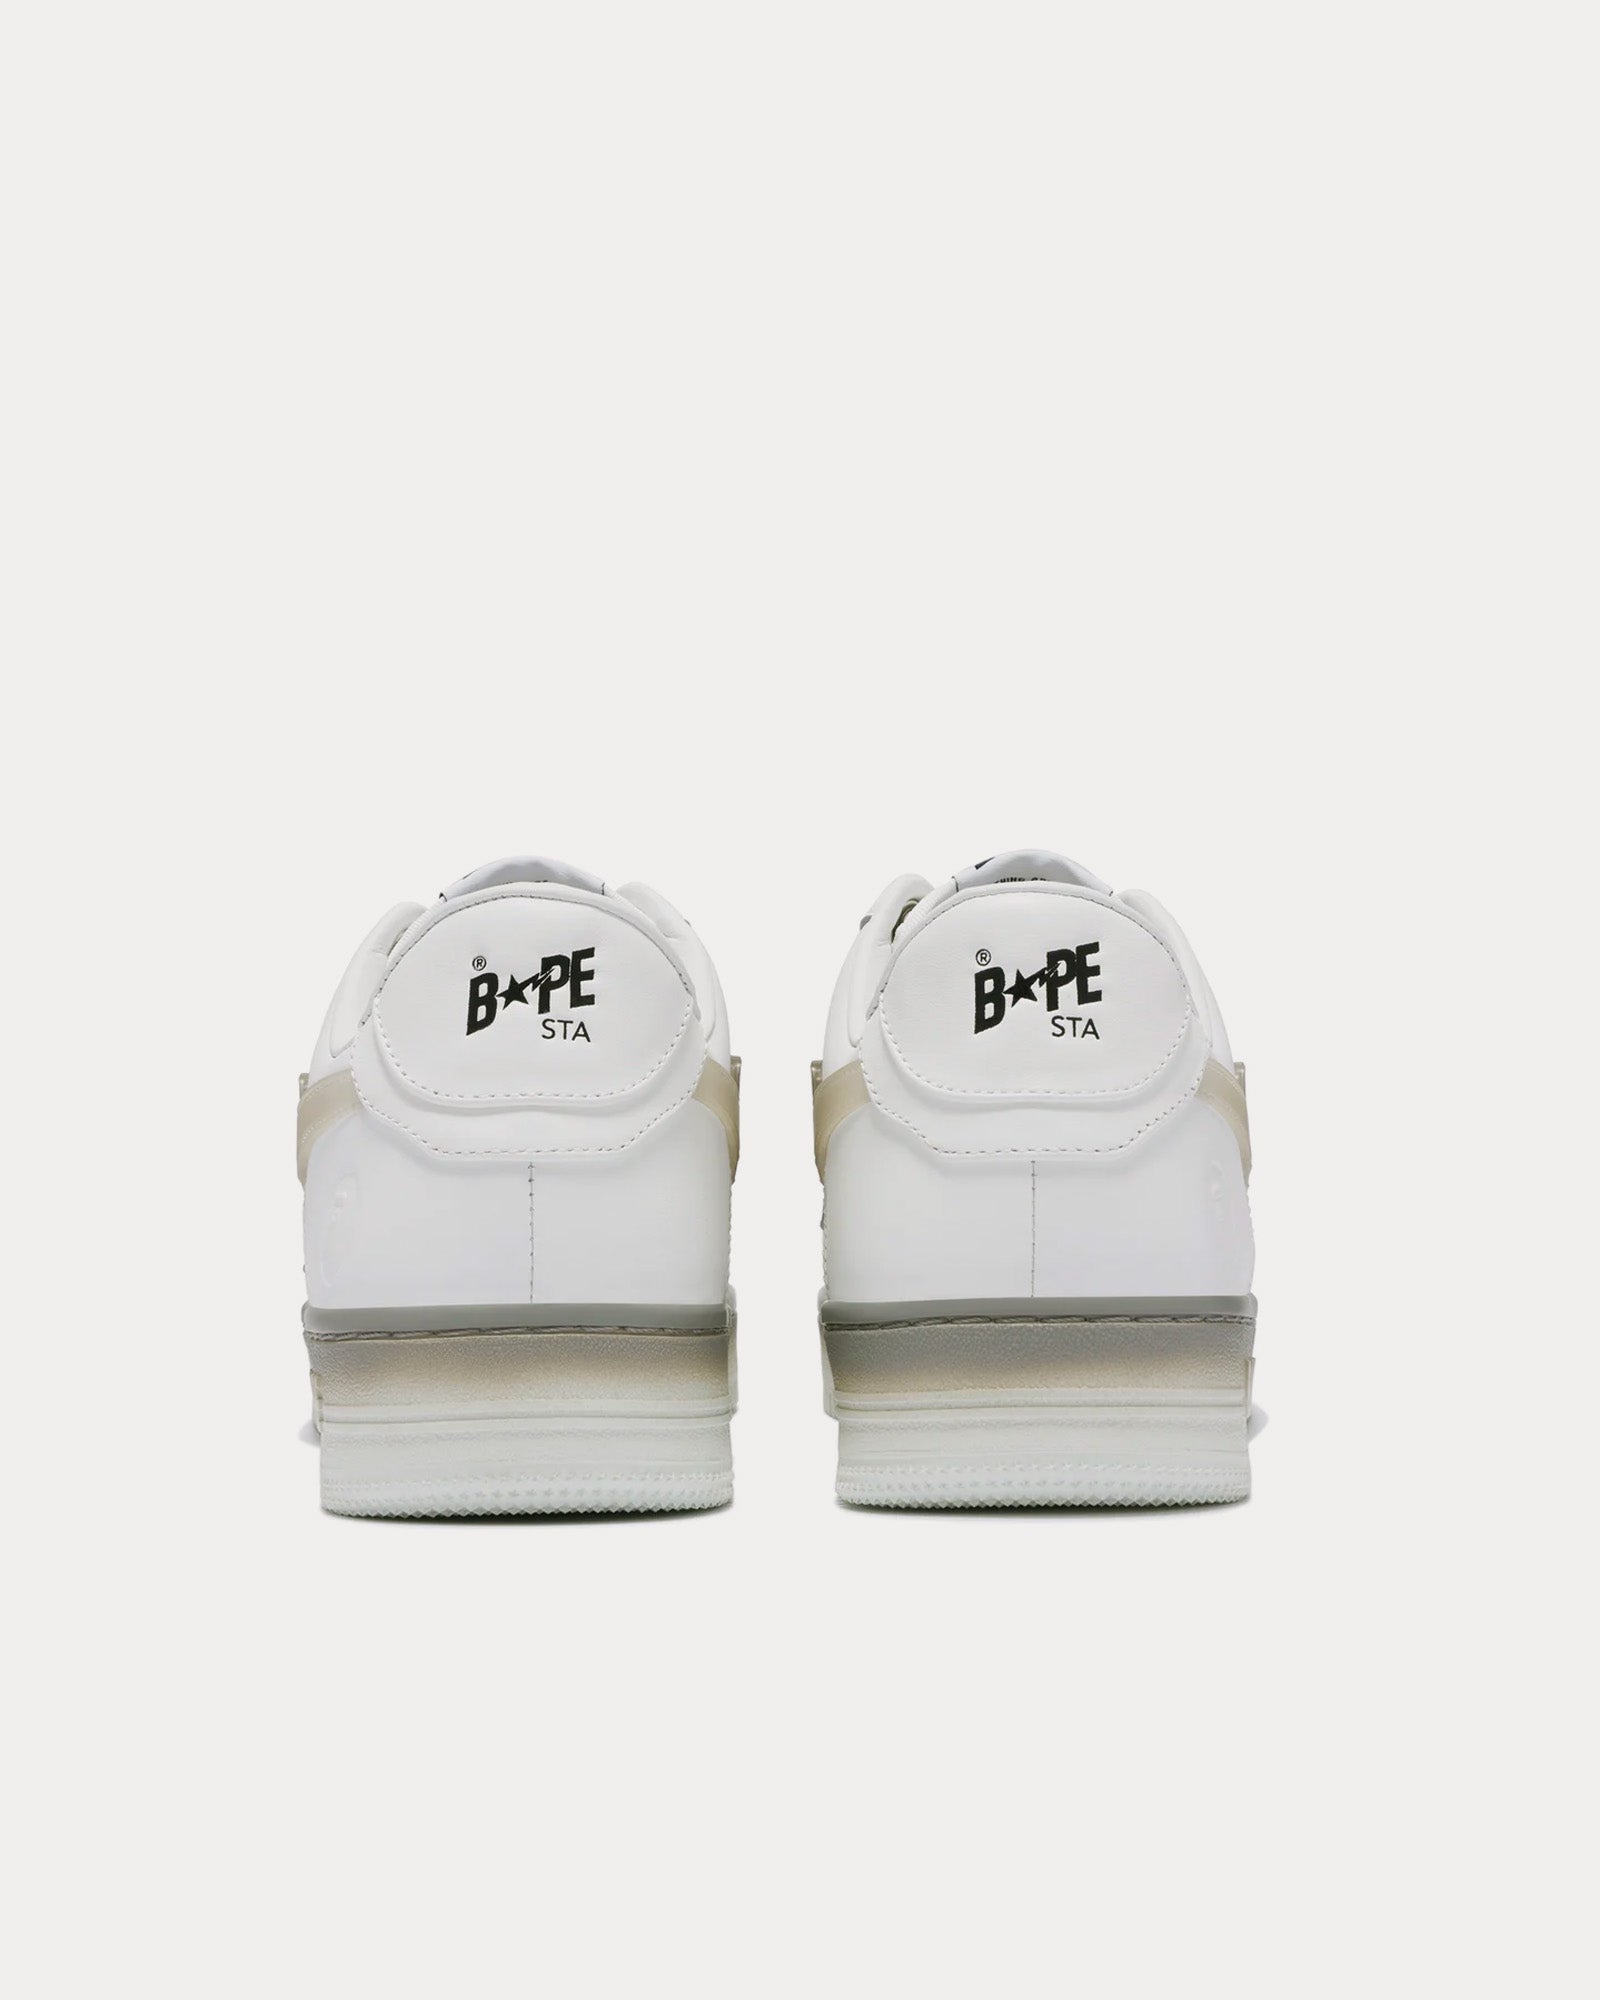 A Bathing APE - Bape Sta #5 White / Grey Low Top Sneakers